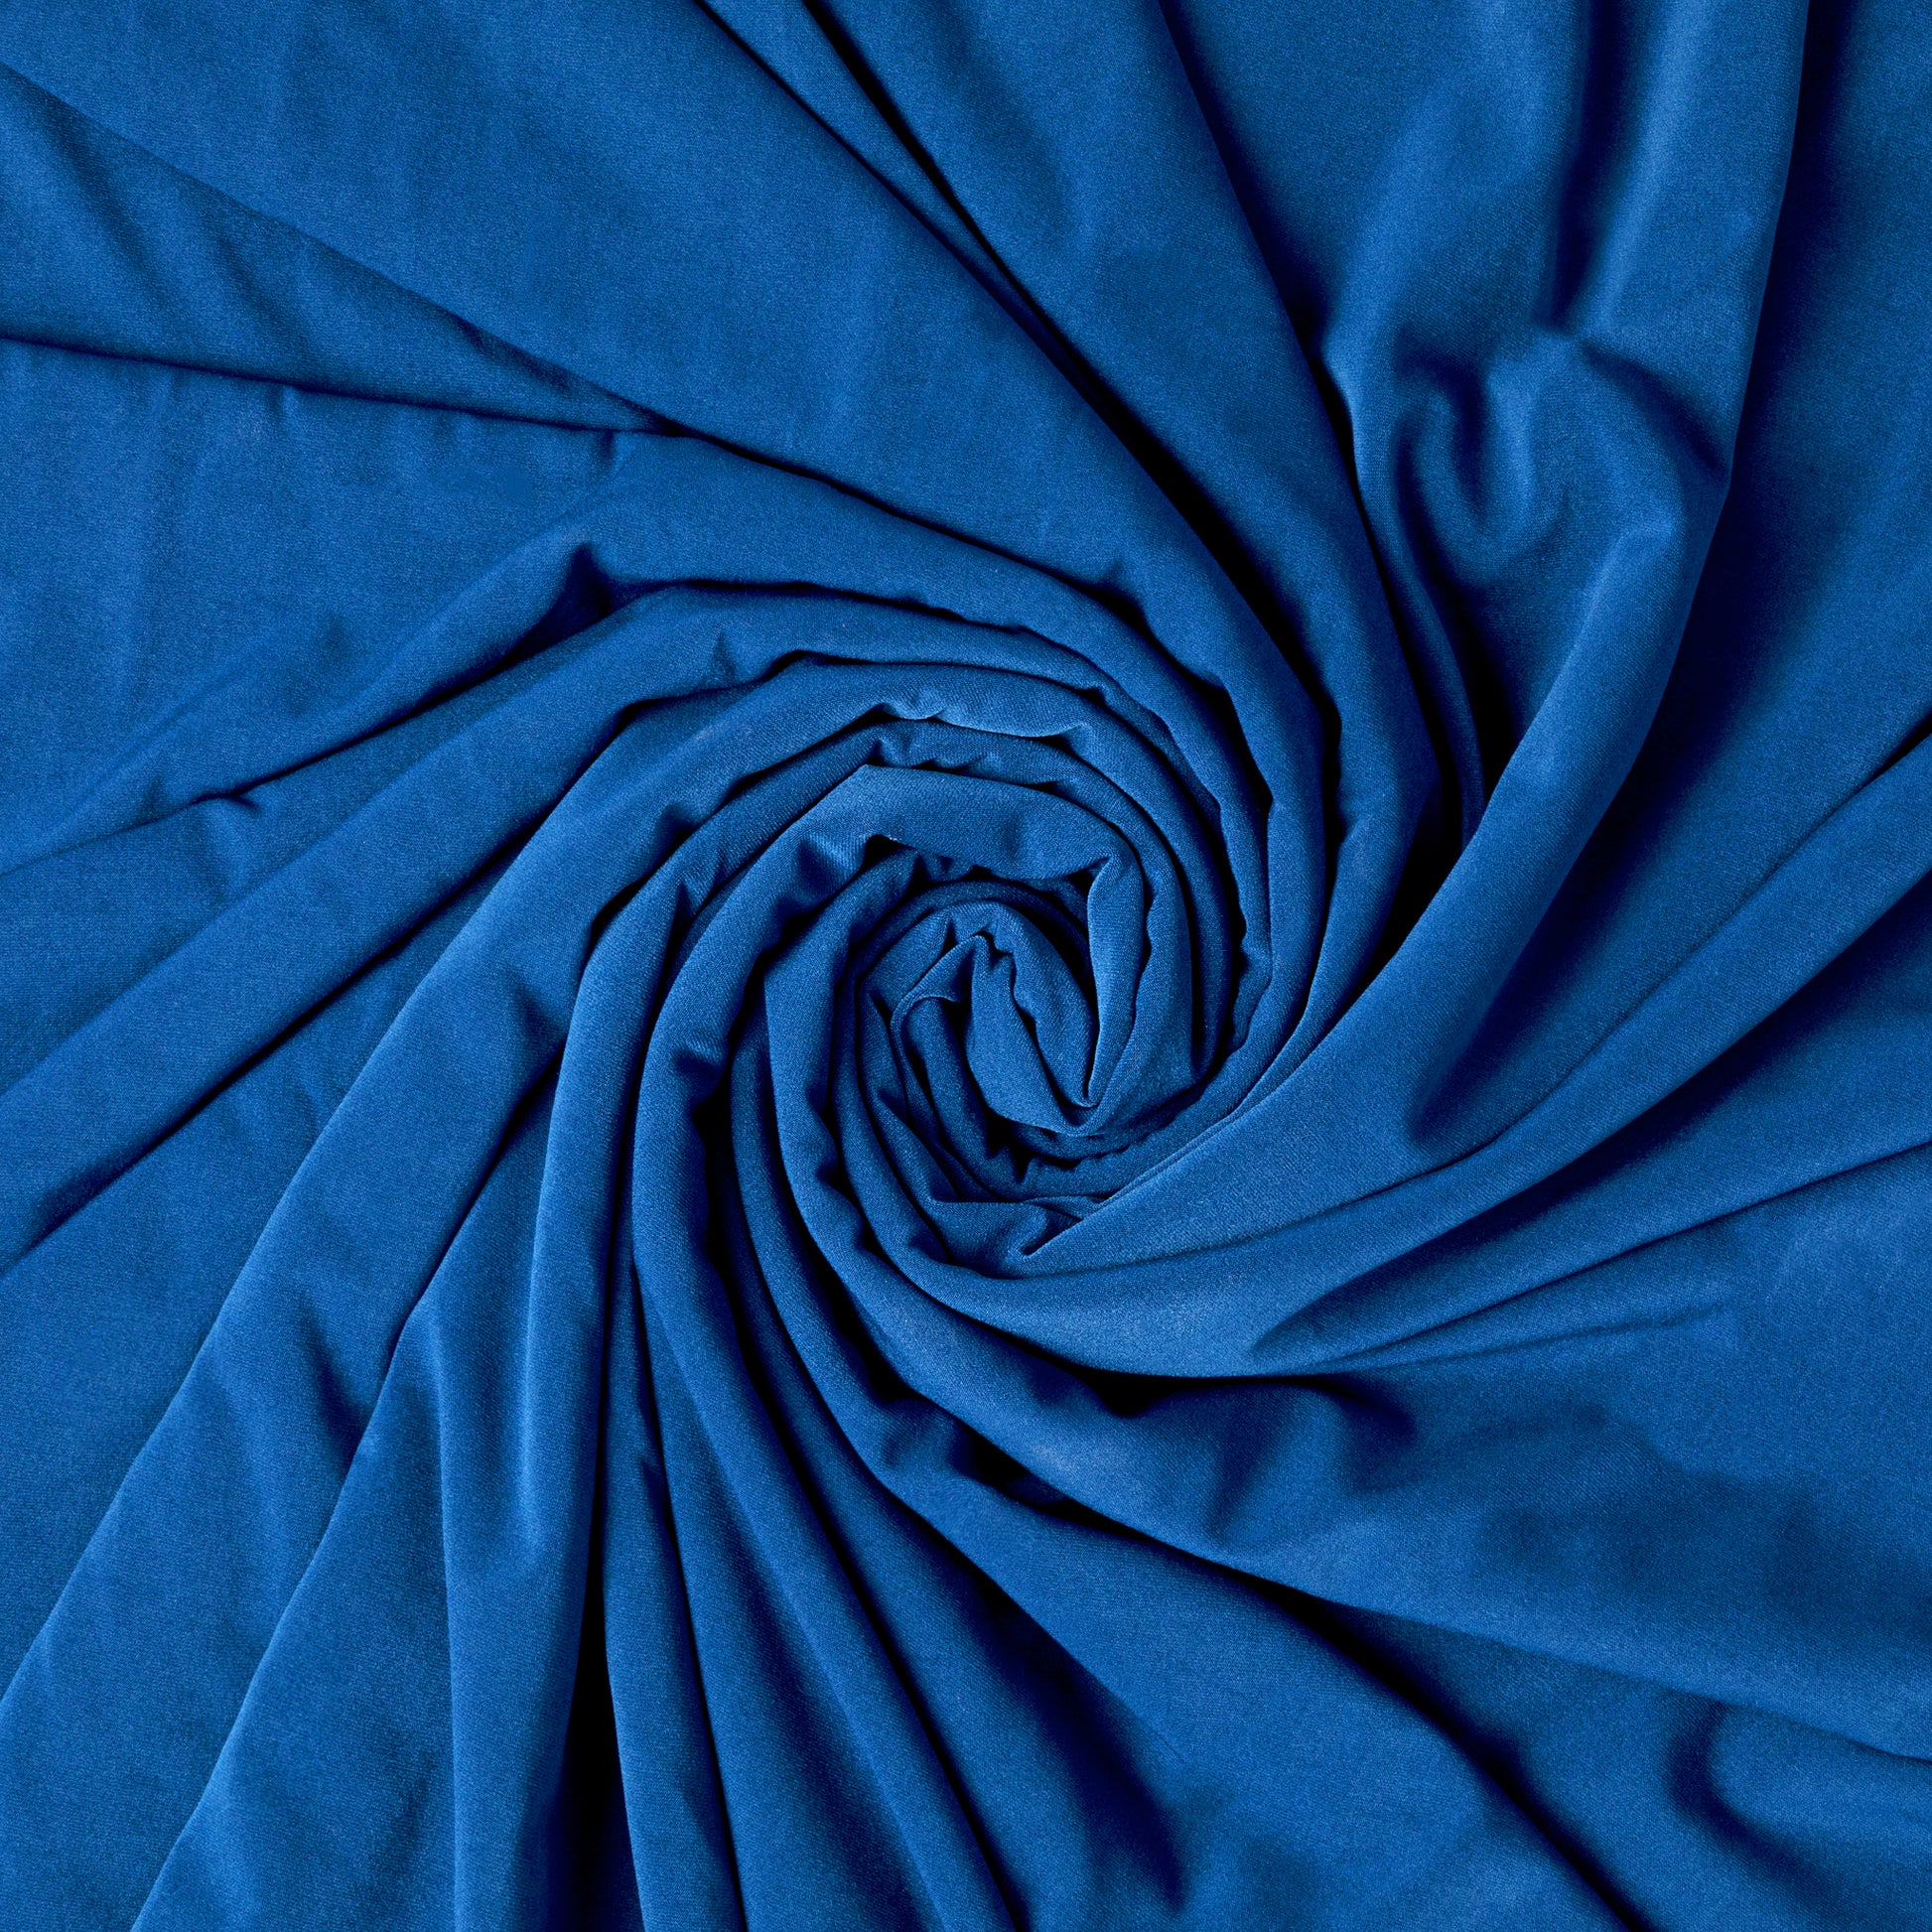 Blue Stretch Cotton ,stretchy Fabric, 4 Way Stretch Material, Blue